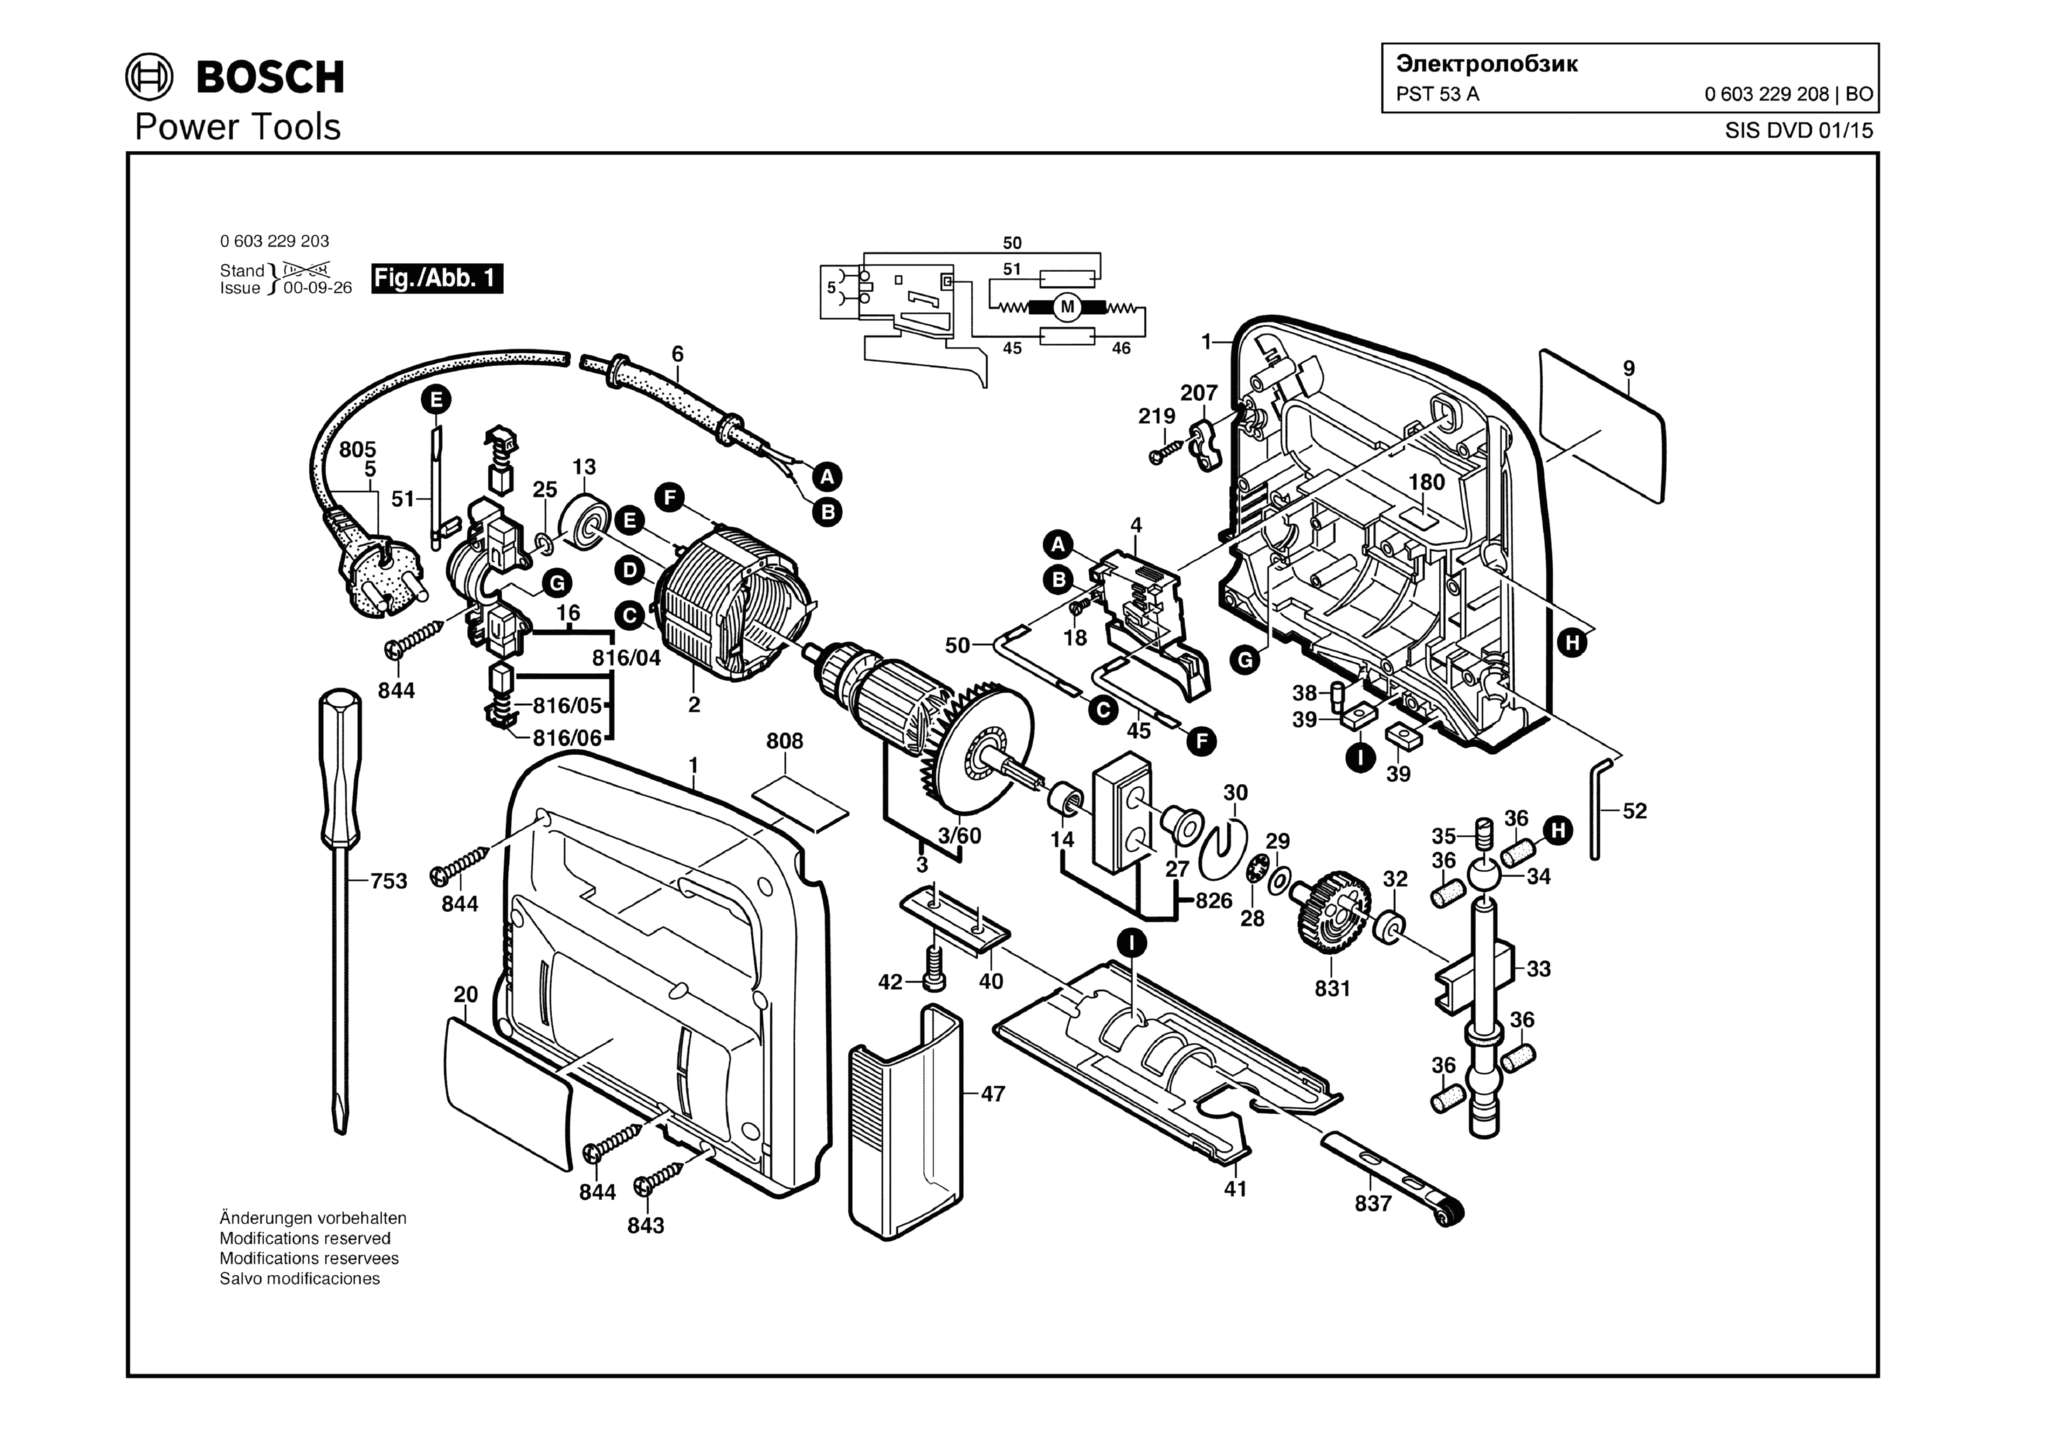 Запчасти, схема и деталировка Bosch PST 53 A (ТИП 0603229208)